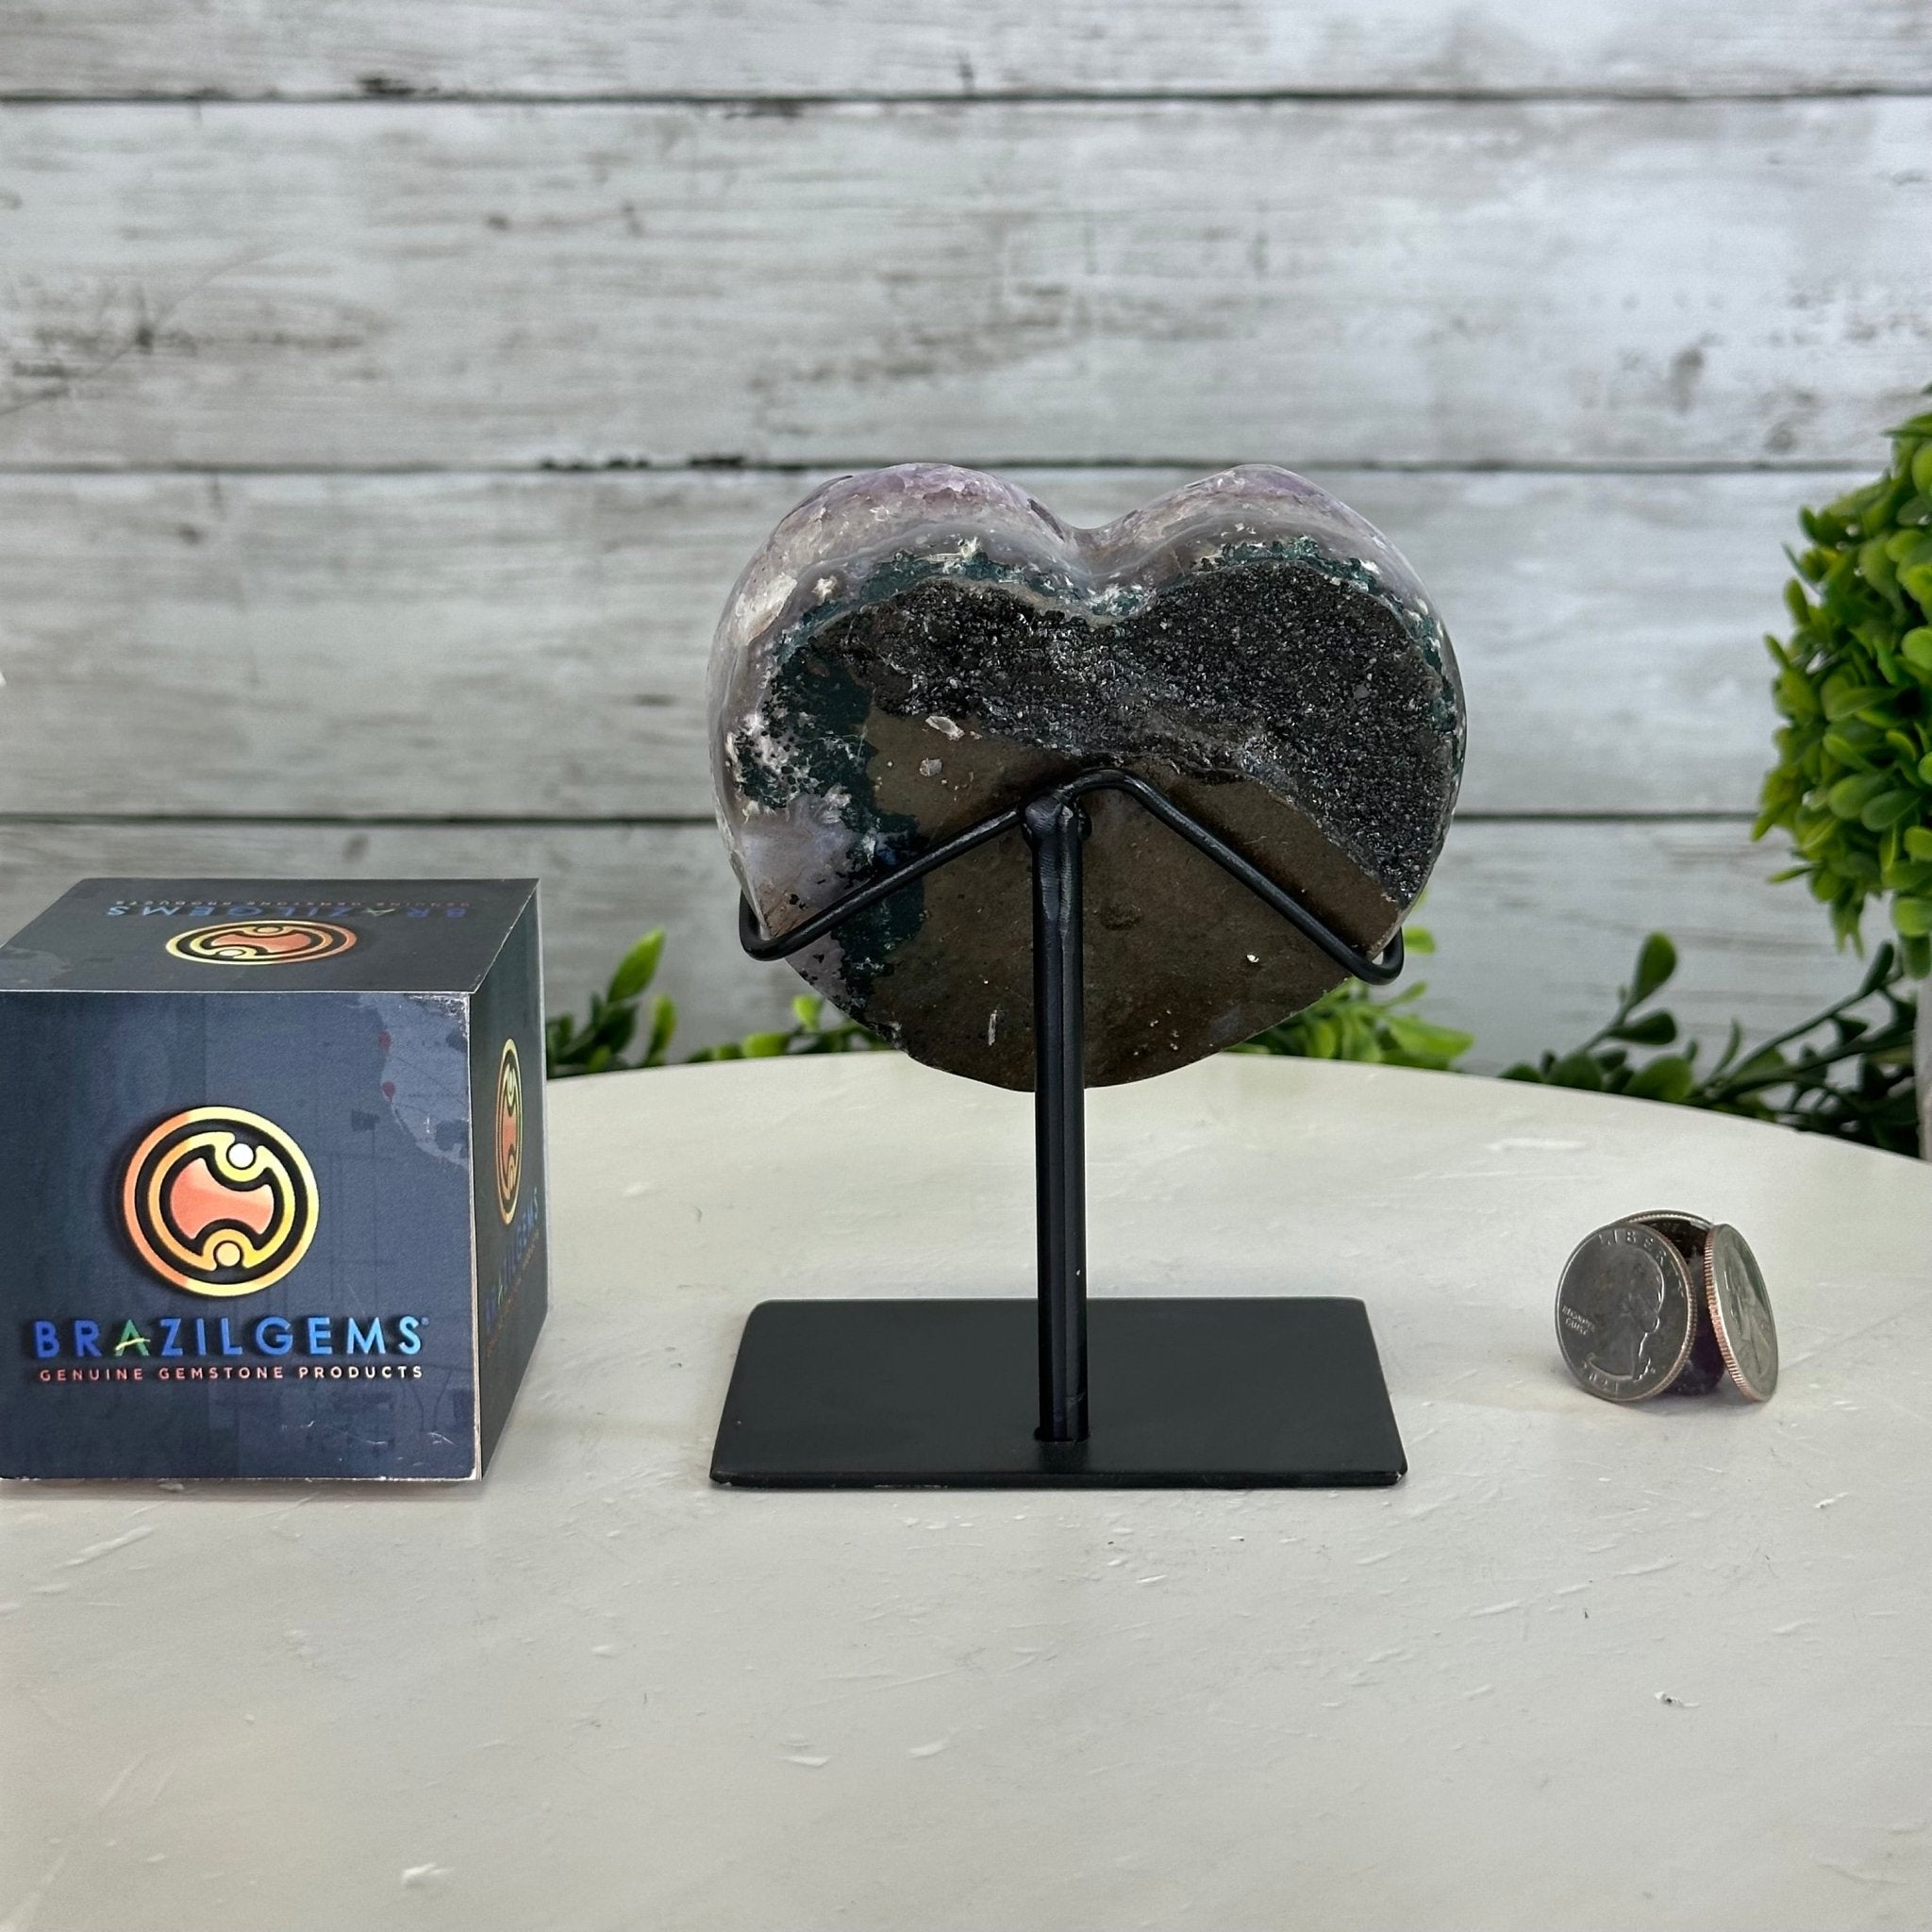 Amethyst Heart Geode w/ metal stand, 1.6 lbs & 5" Tall #5463-0305 - Brazil GemsBrazil GemsAmethyst Heart Geode w/ metal stand, 1.6 lbs & 5" Tall #5463-0305Hearts5463-0305